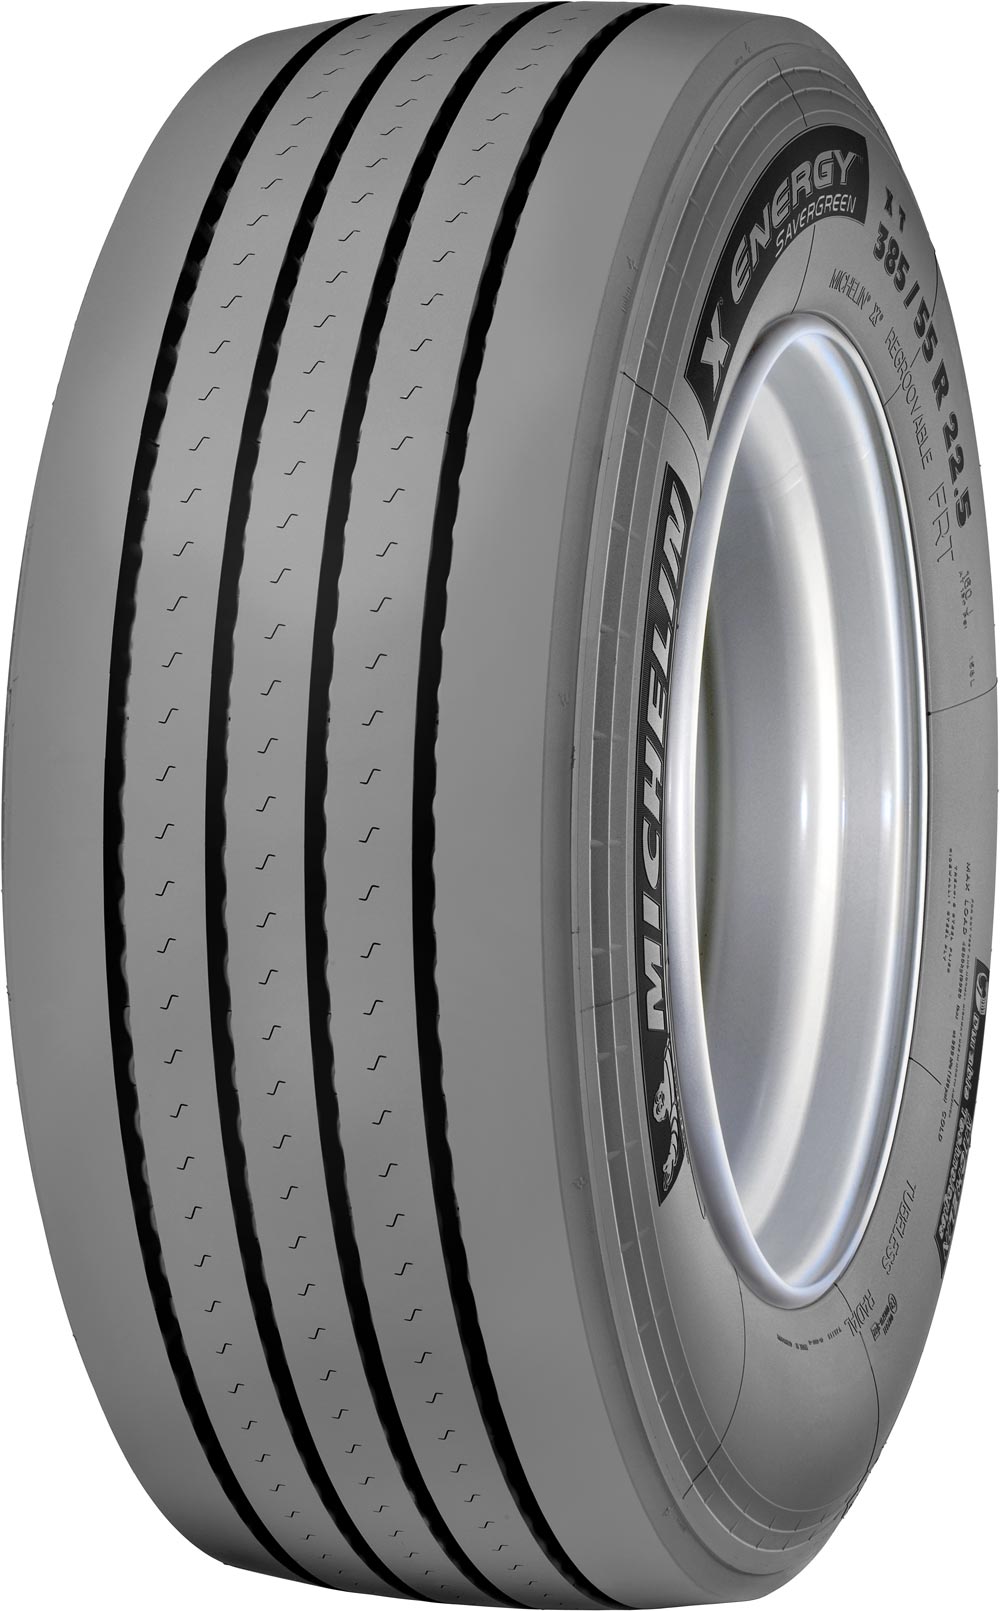 product_type-heavy_tires MICHELIN X Energy Savergreen XT 315/60 R22.5 L